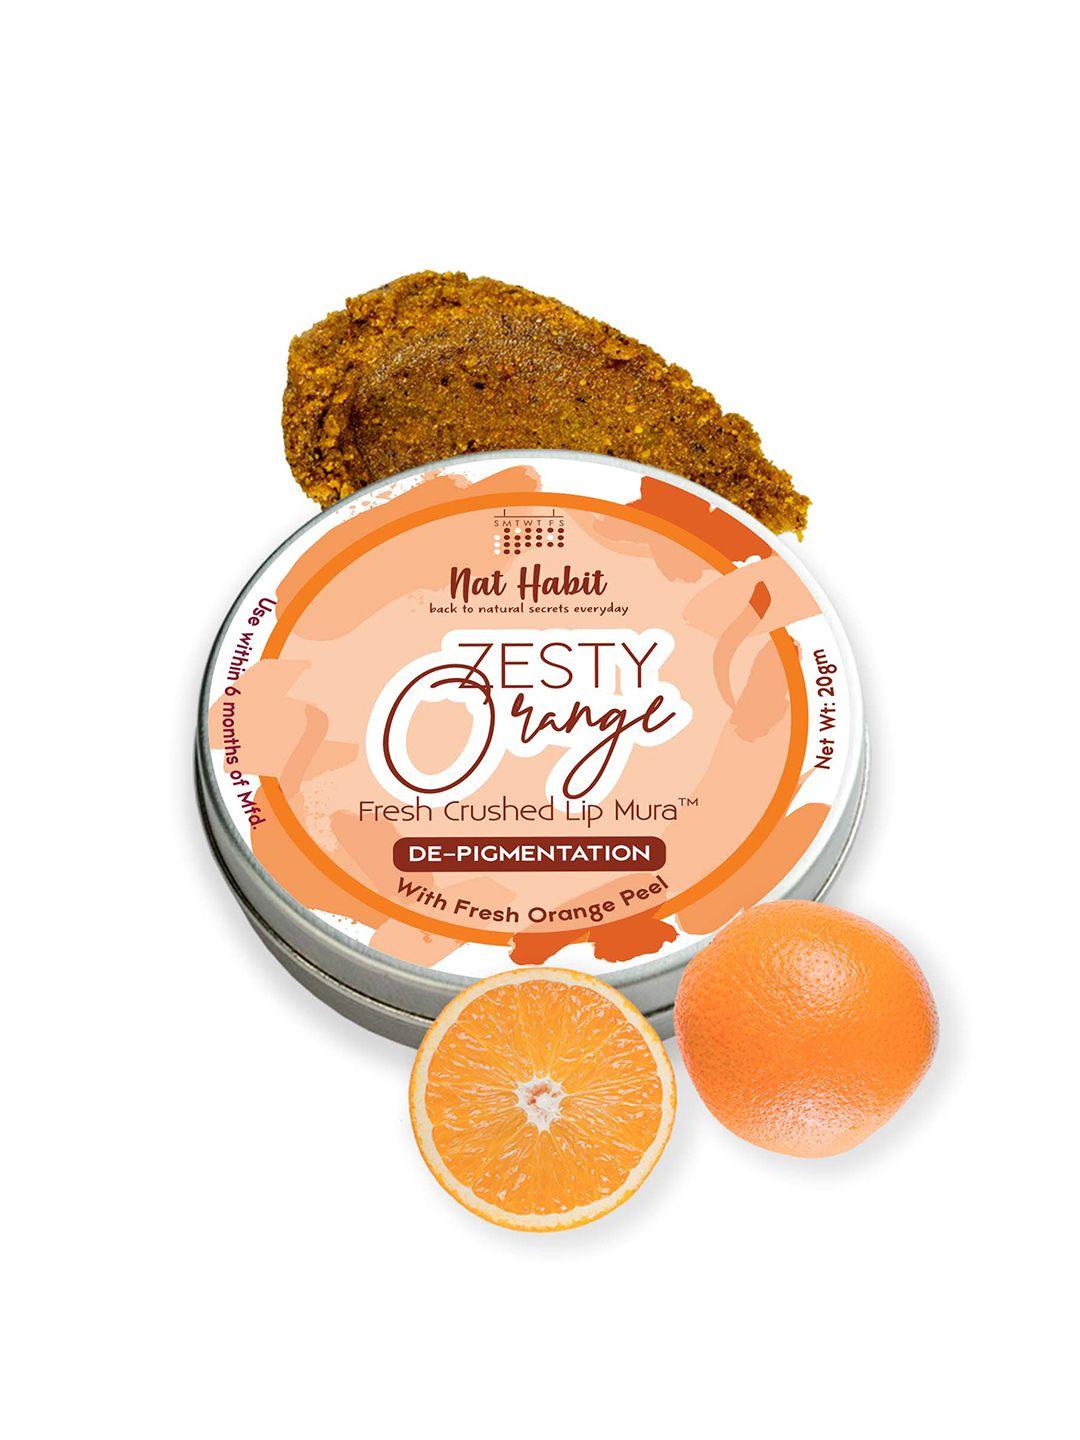 nat habit zesty orange fresh crushed lip mura for de-pigmentation - 20g